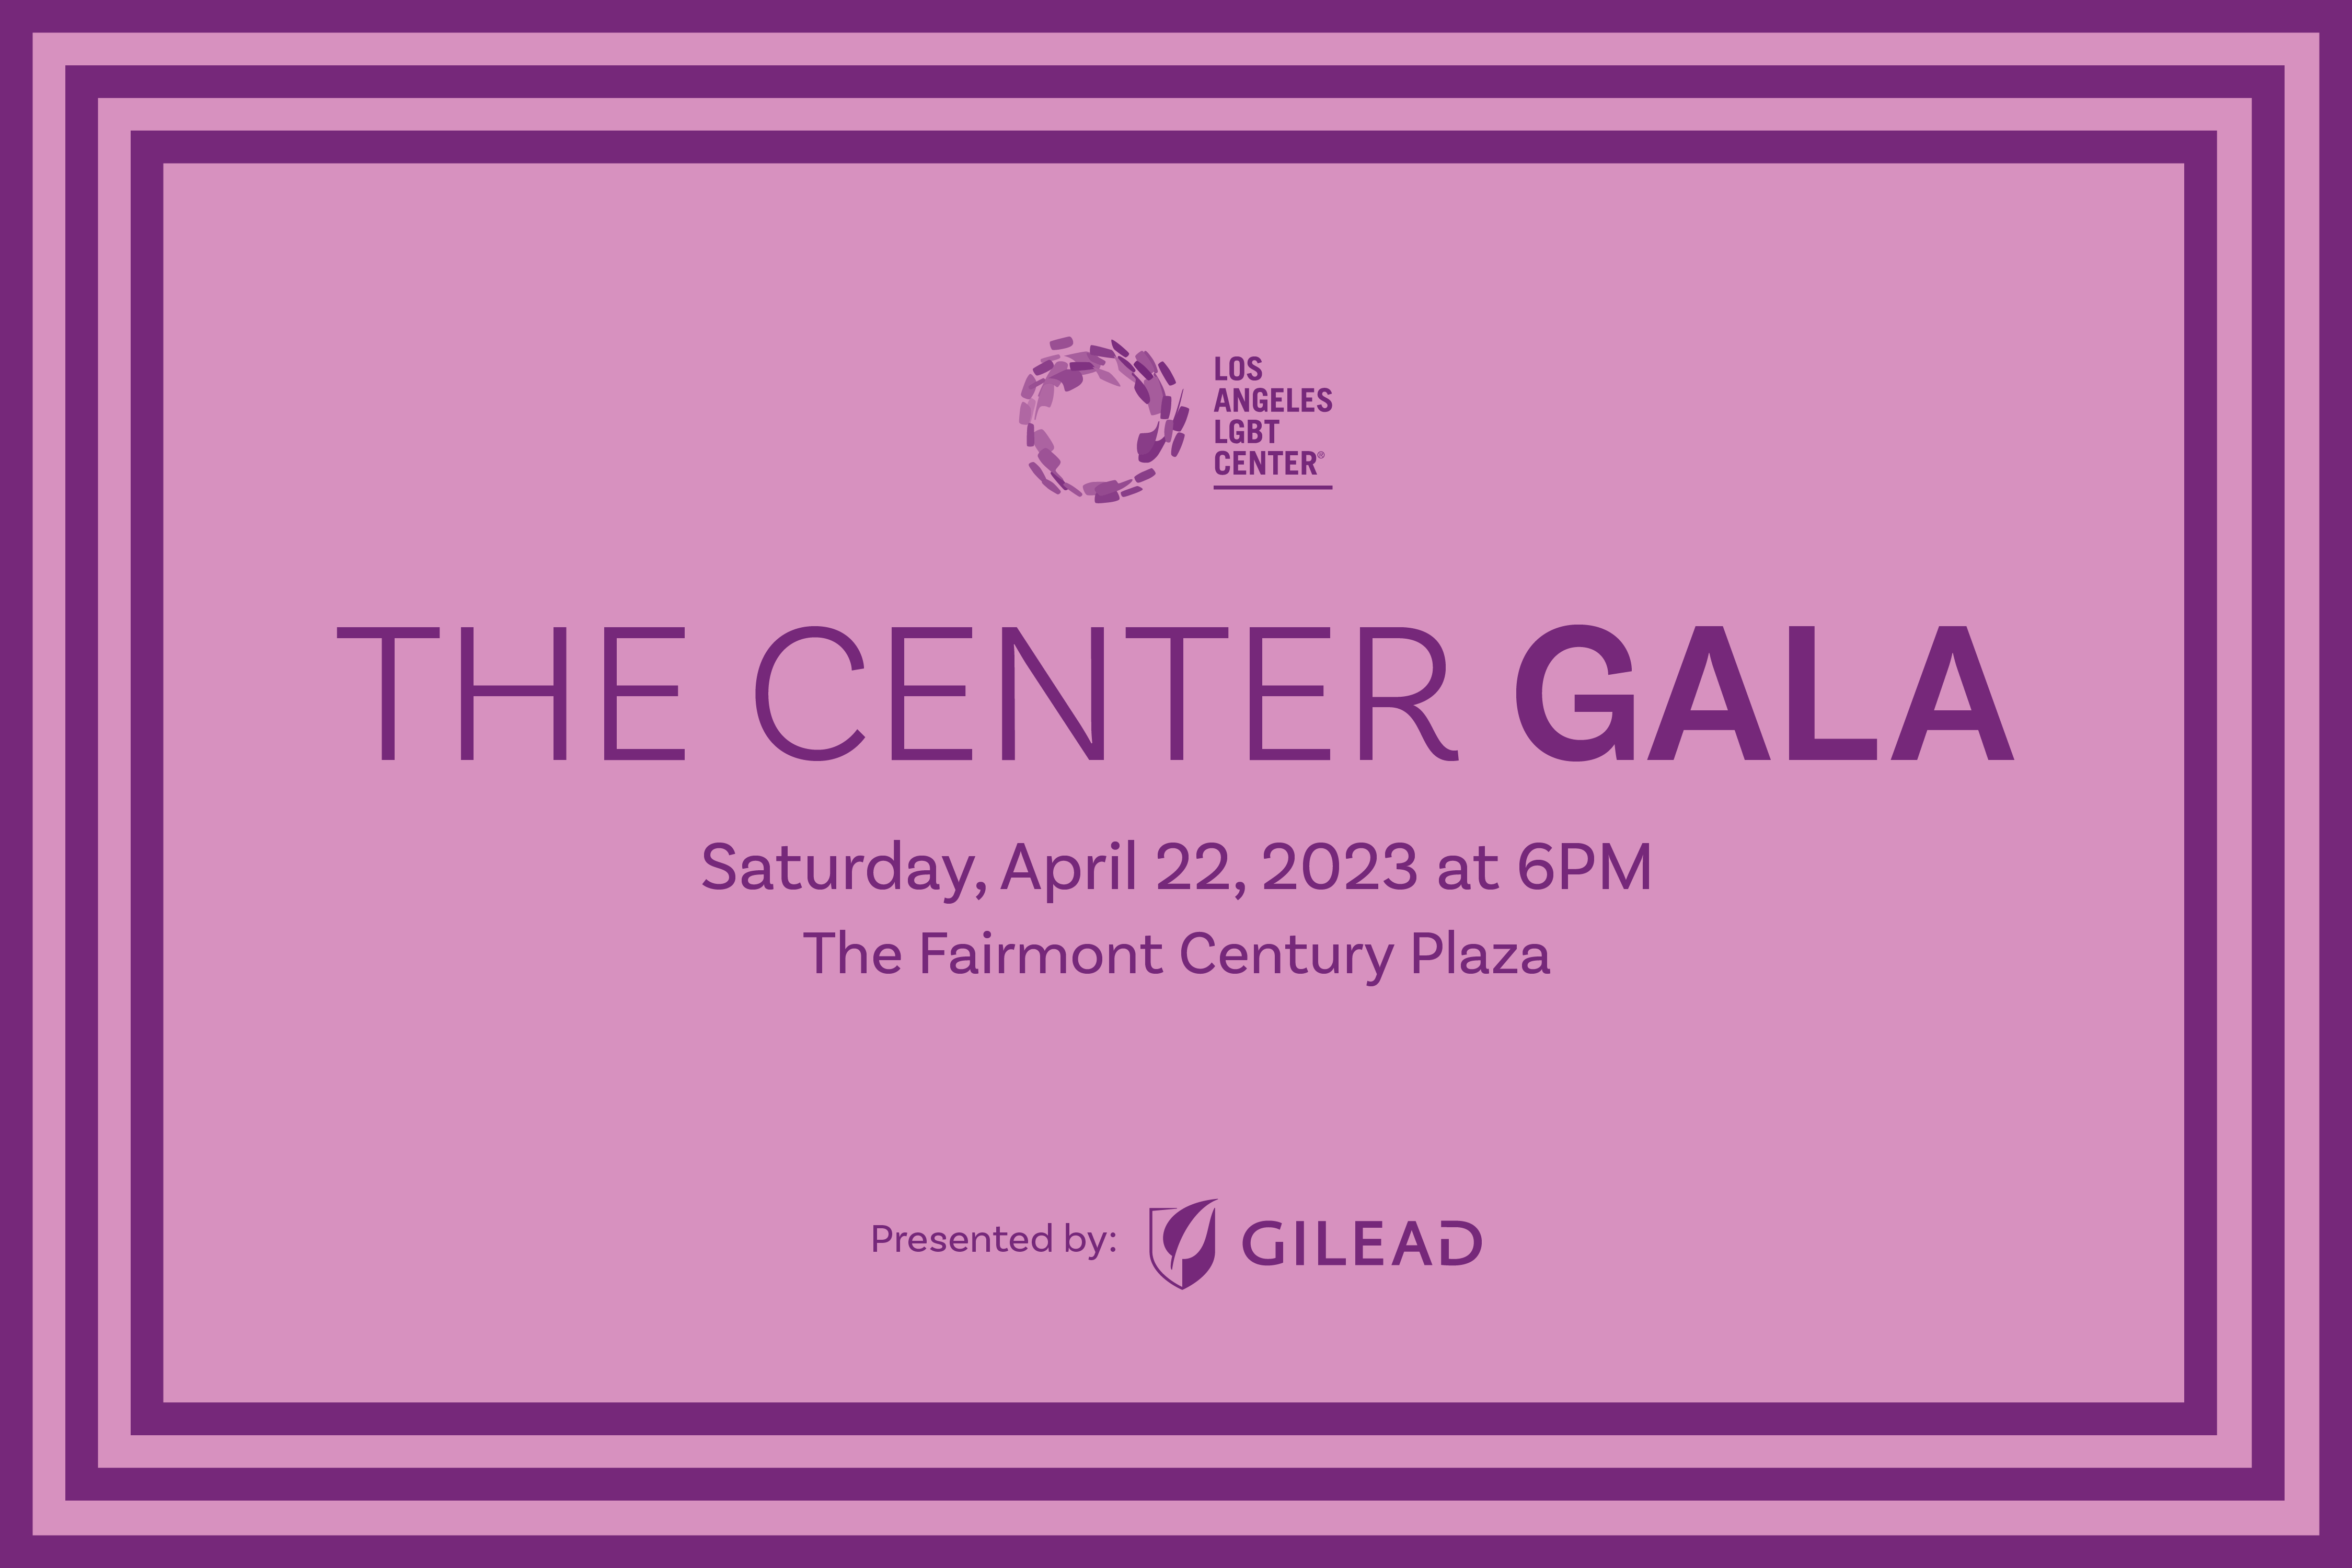 The Center Gala